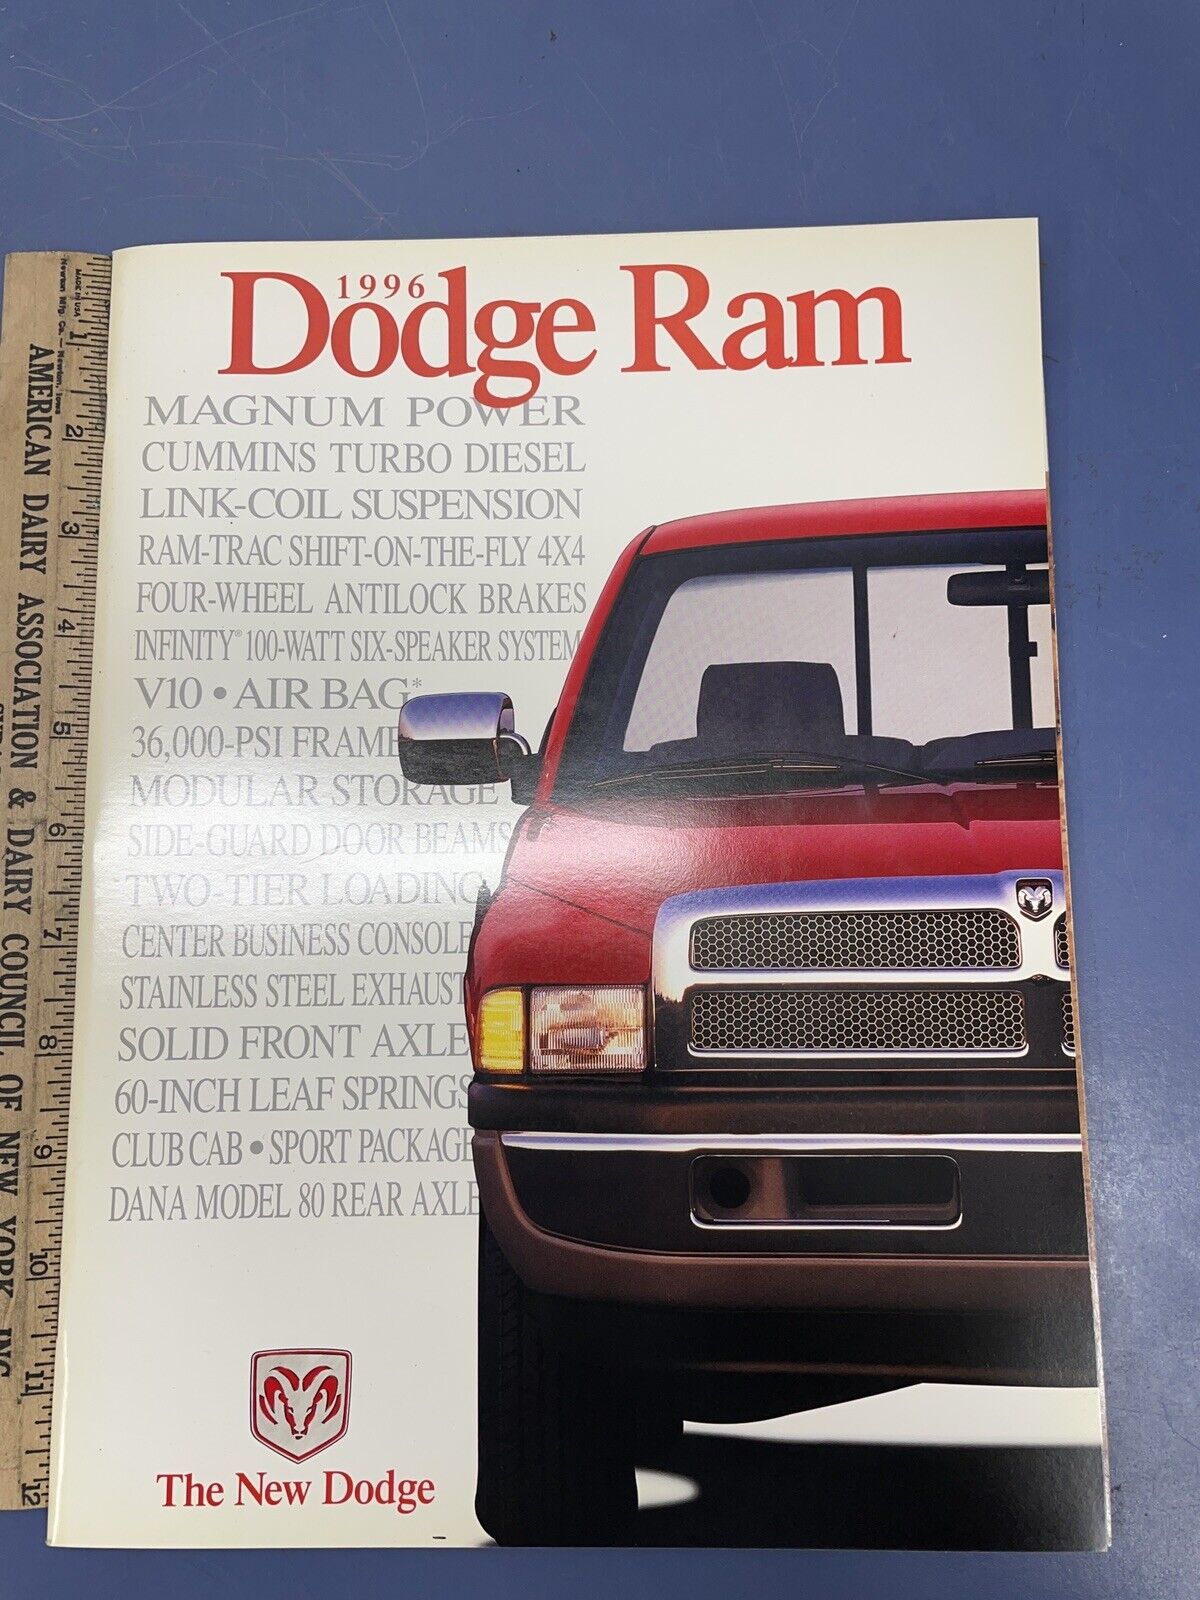 NOS 1996 Dodge Ram Pick Up Truck Dealership Sales Brochure Cummins Turbo Diesel